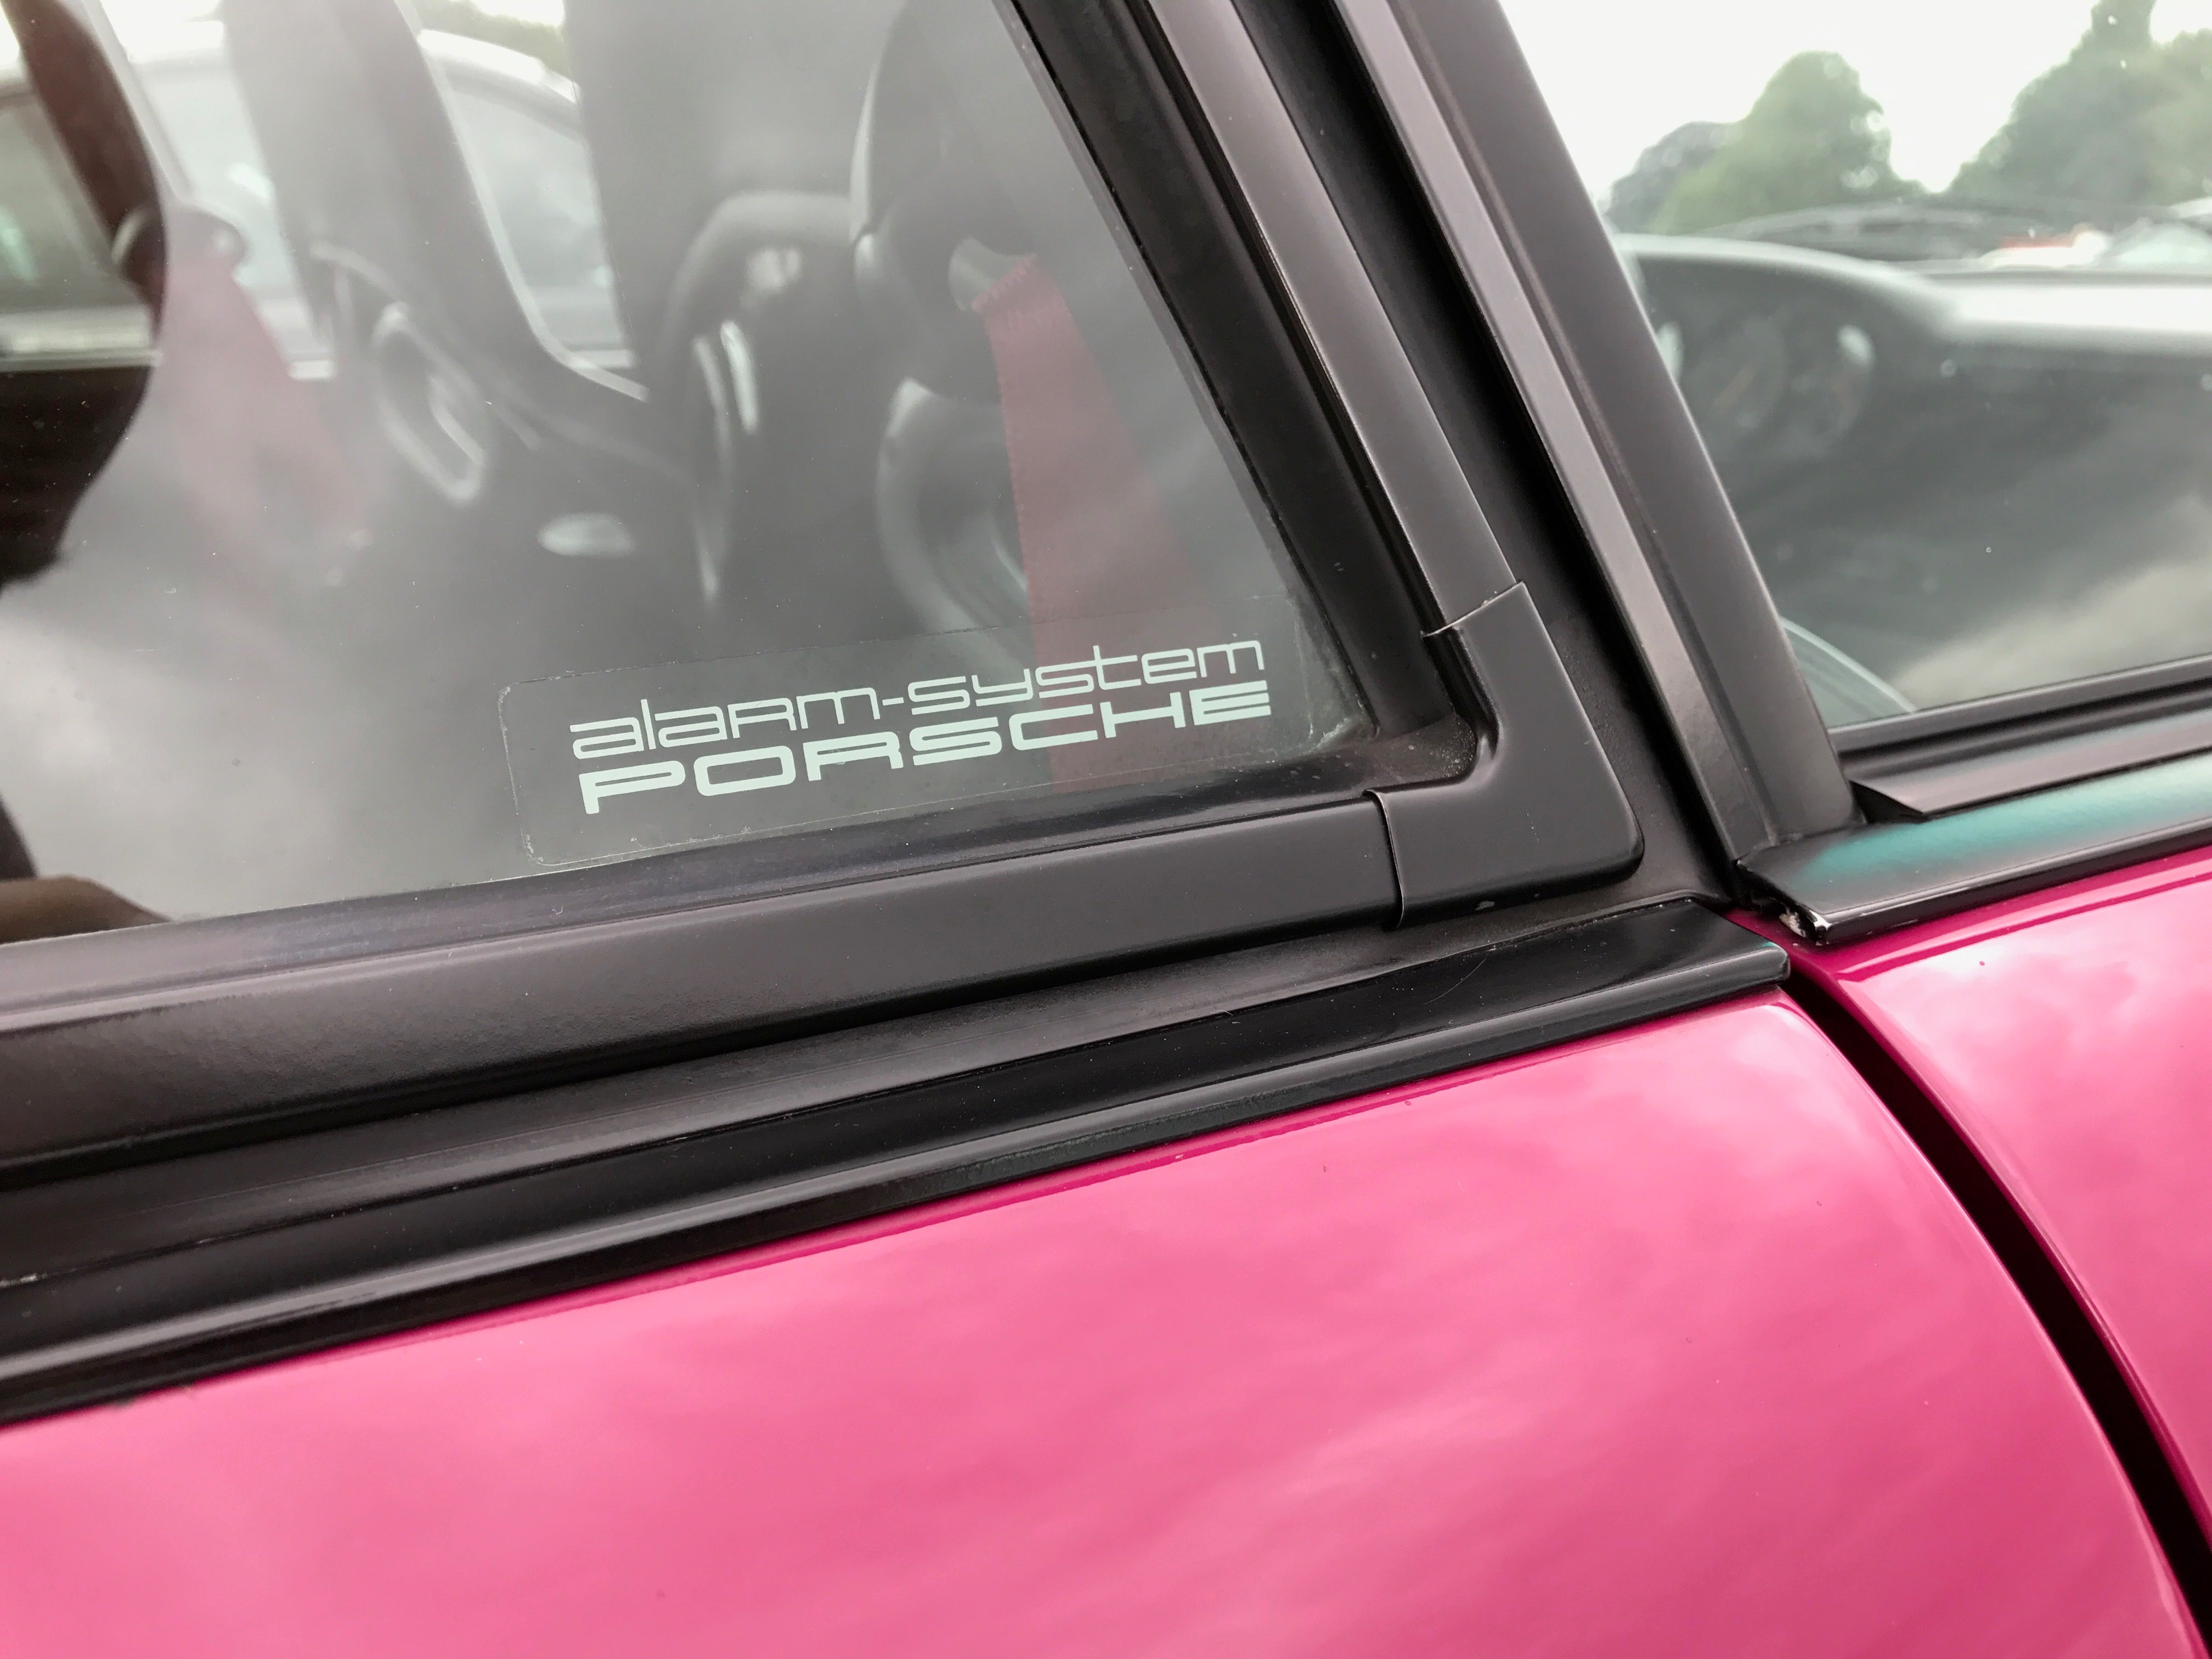 Official Porsche 2x 'Porsche Alarm System' Window Stickers for Porsche 924 Models